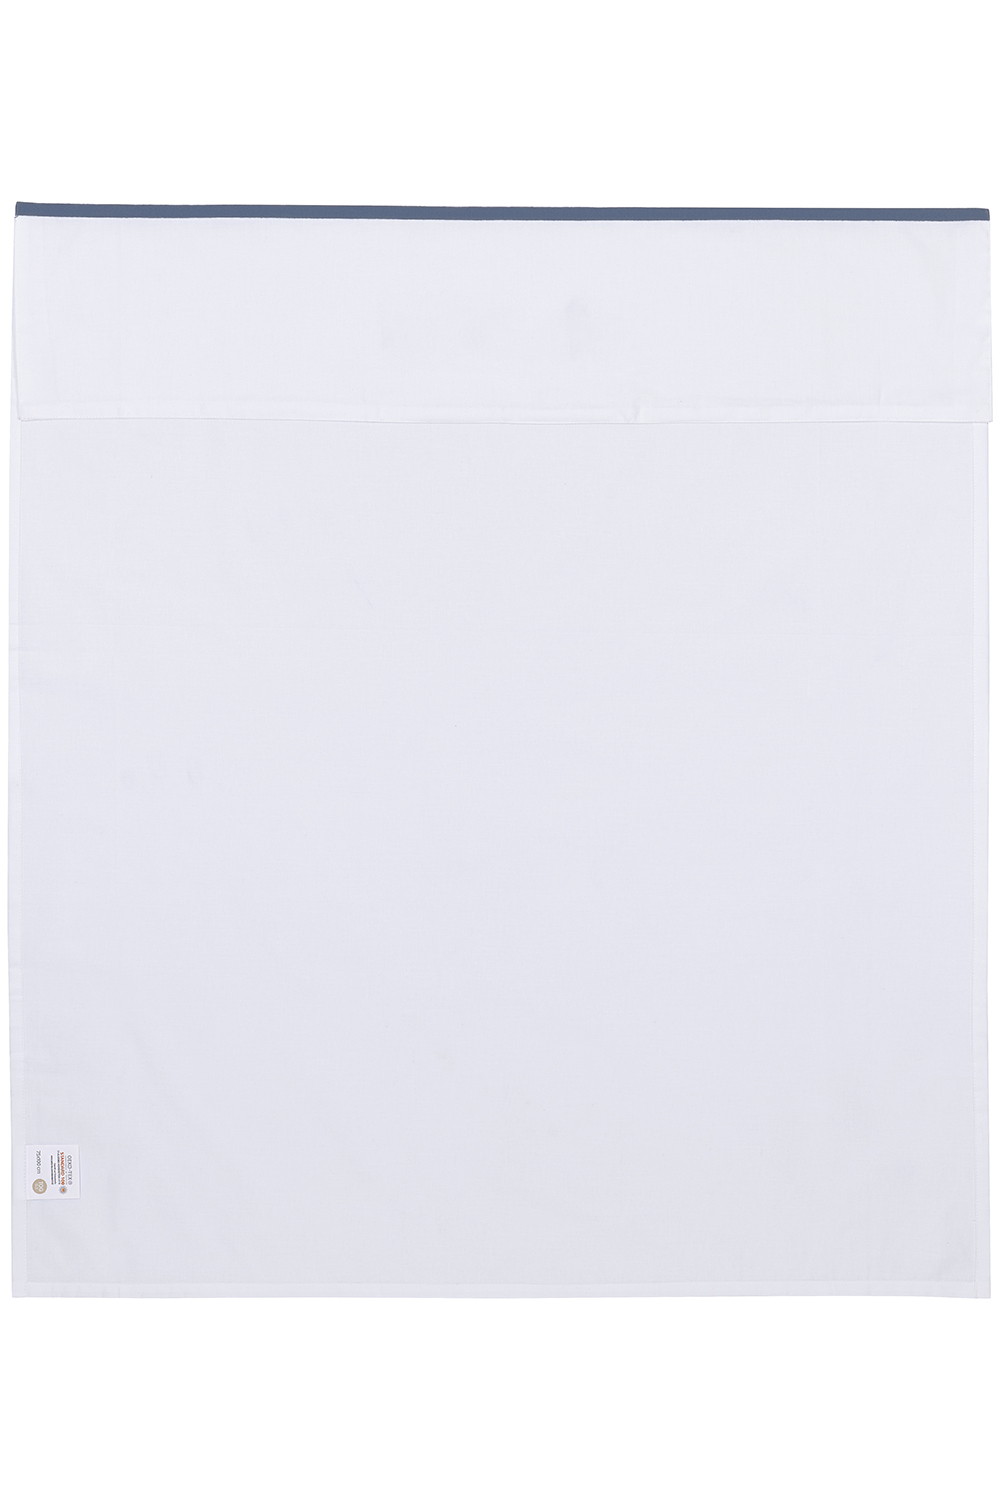 Kinderbettlaken Biese - indigo - 100x150cm